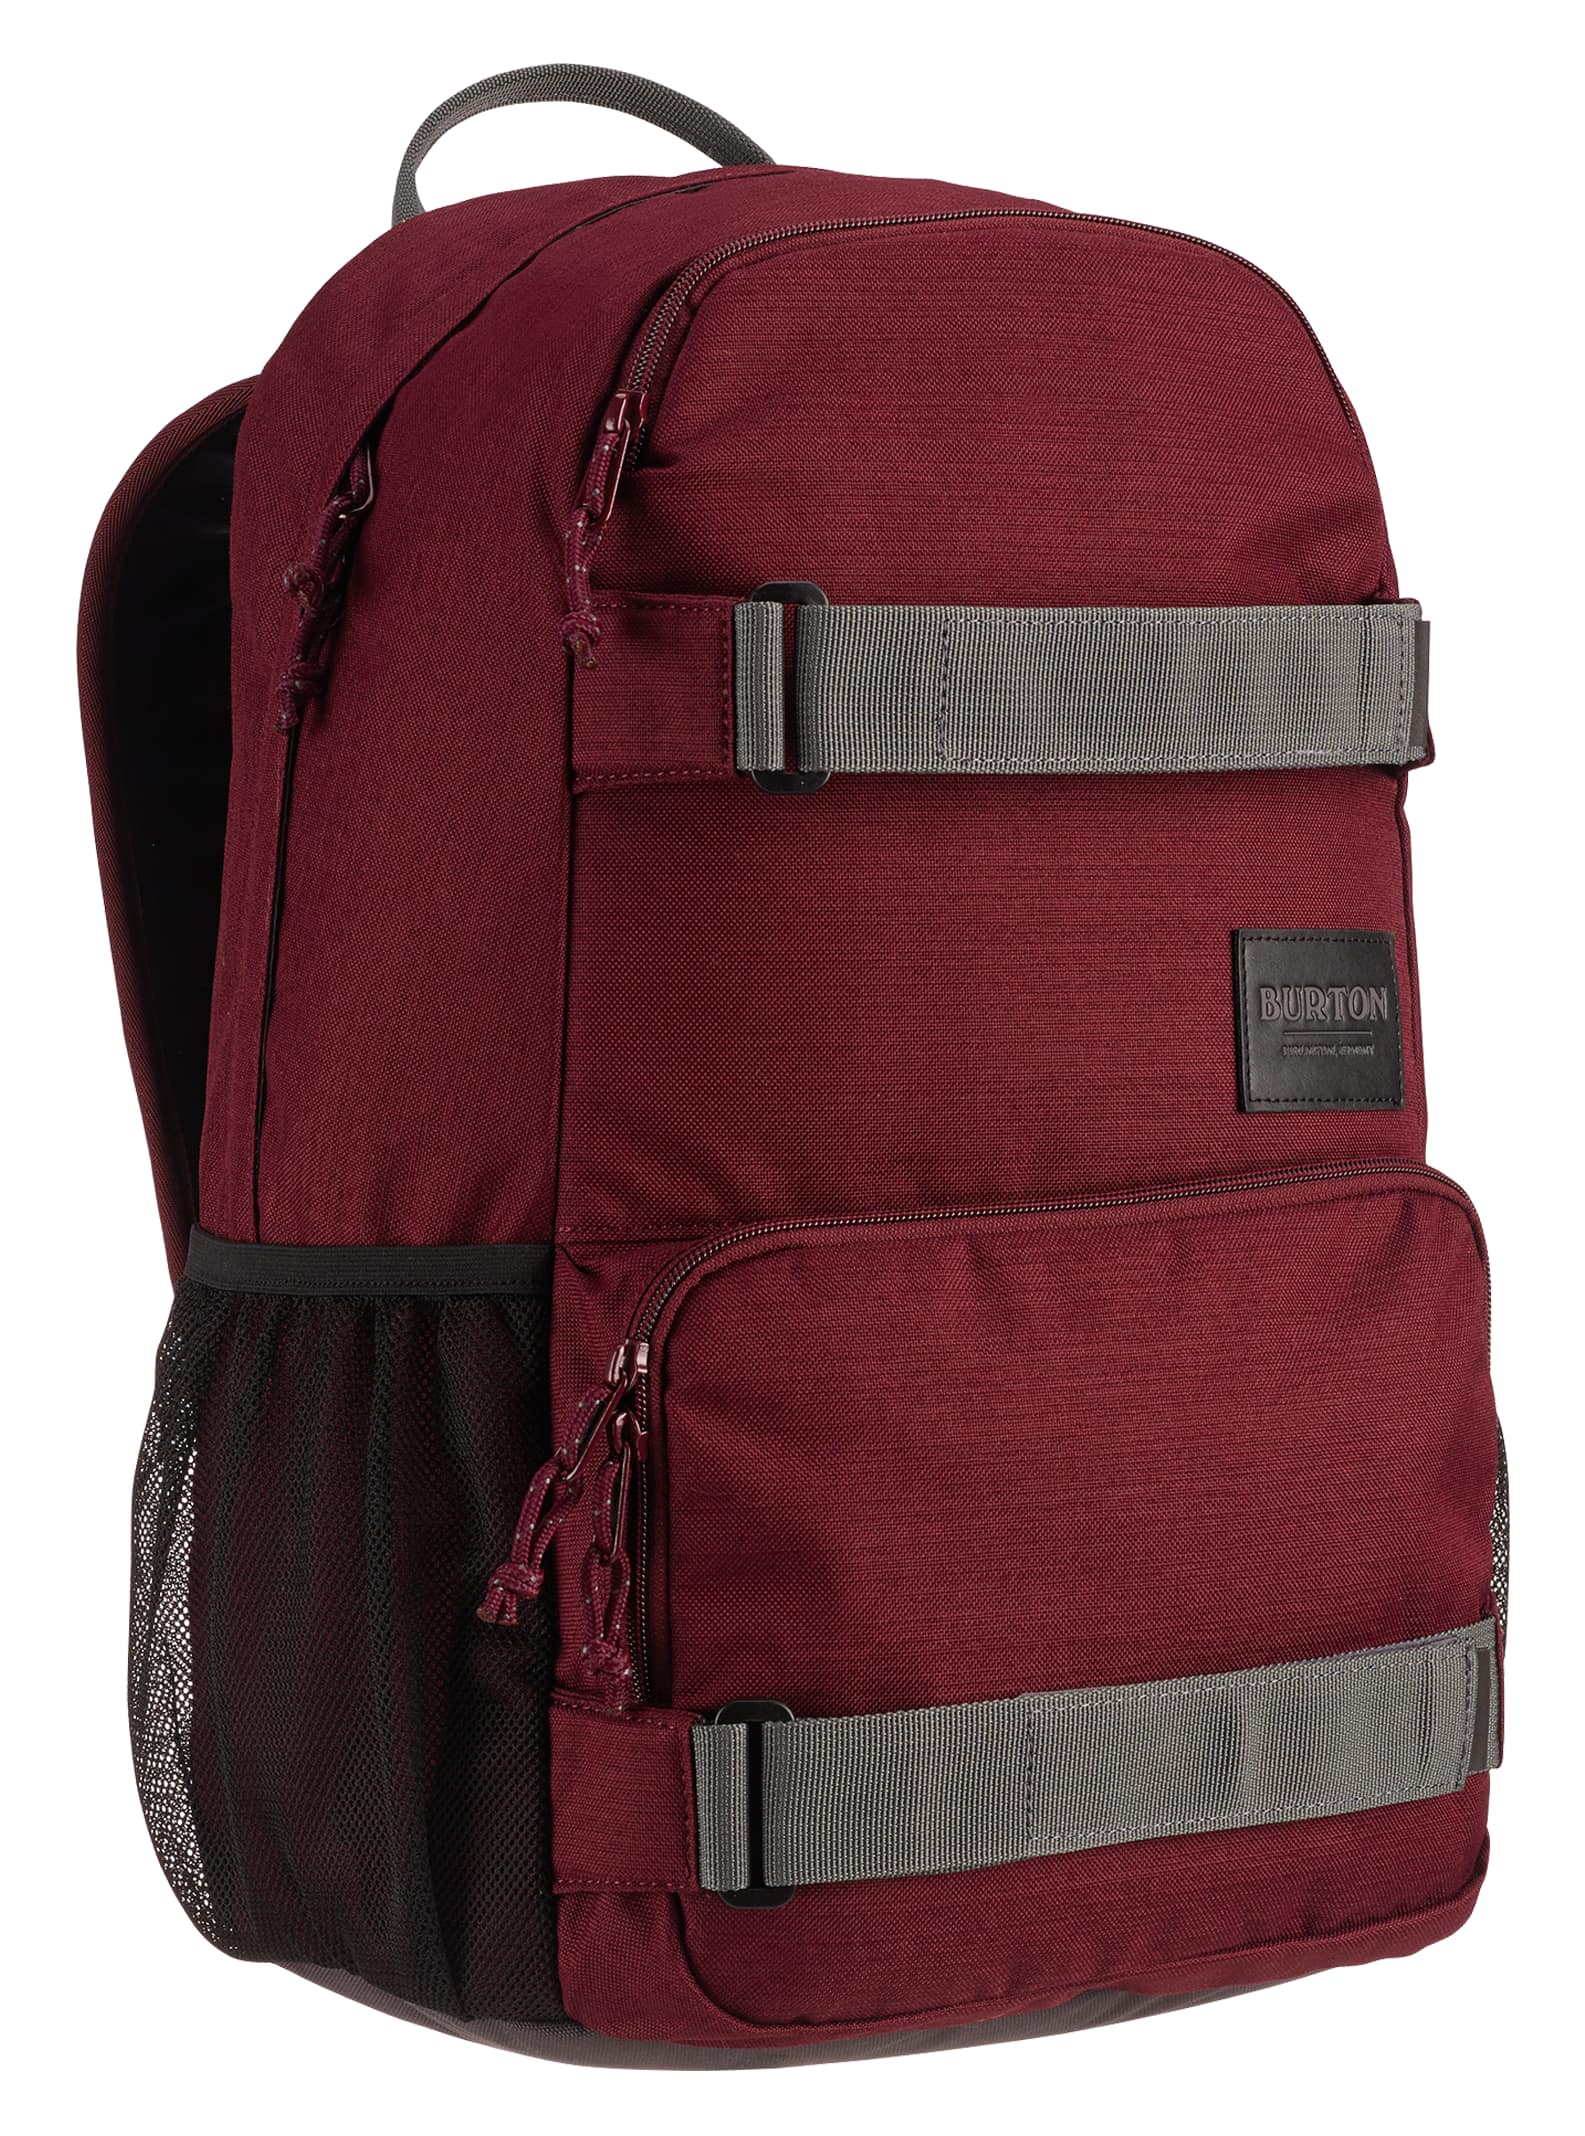 Burton Treble Yell 21L Backpack | Burton.com Spring 2021 US